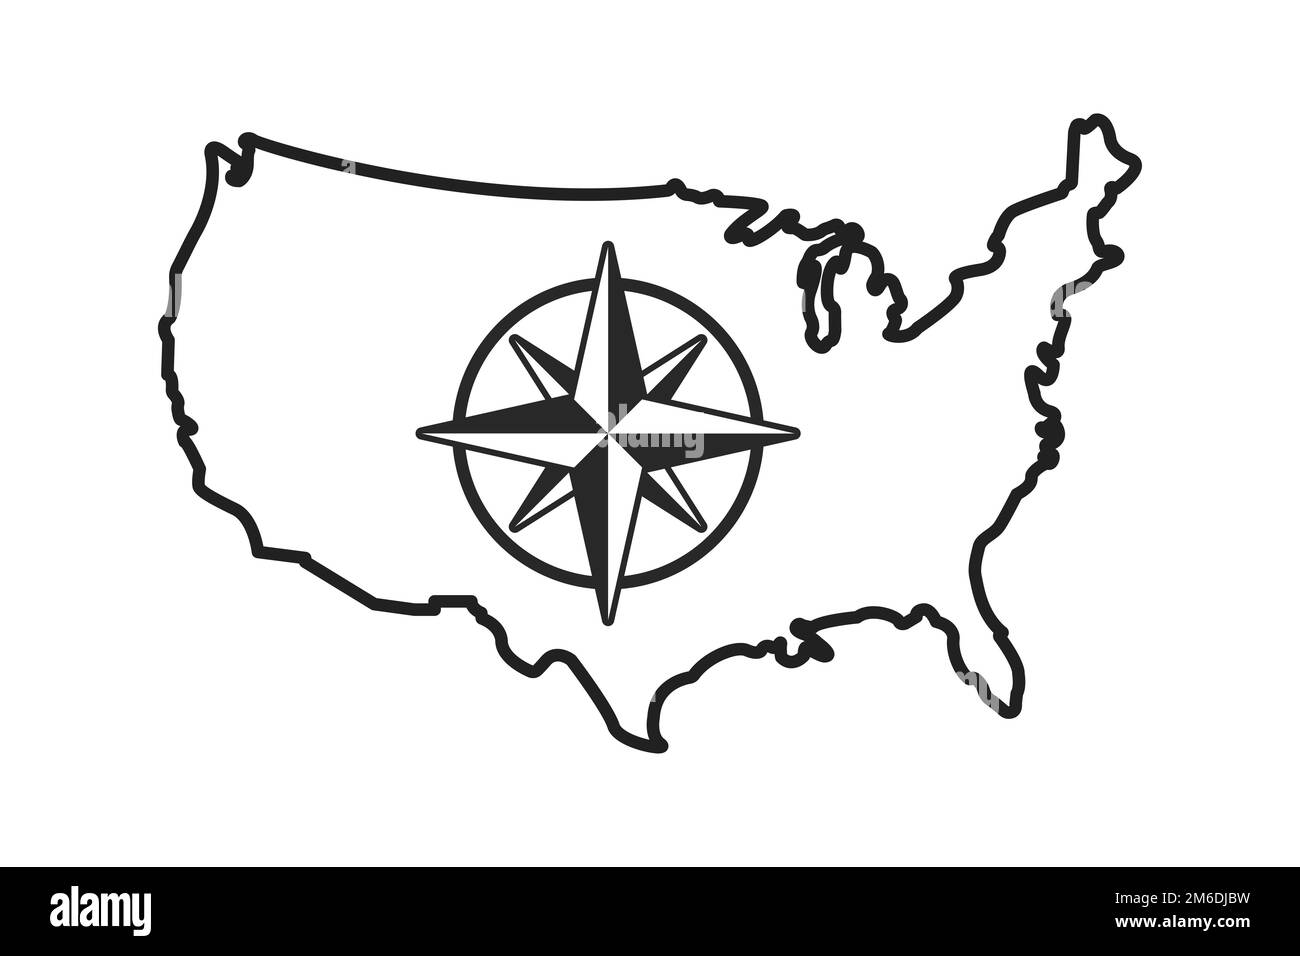 Vektor-usa-Landkarte mit isoliertem Kompass. Kompass, Navigationssymbol. Vektorgrafik. Klassischer Kompass. Stockfoto